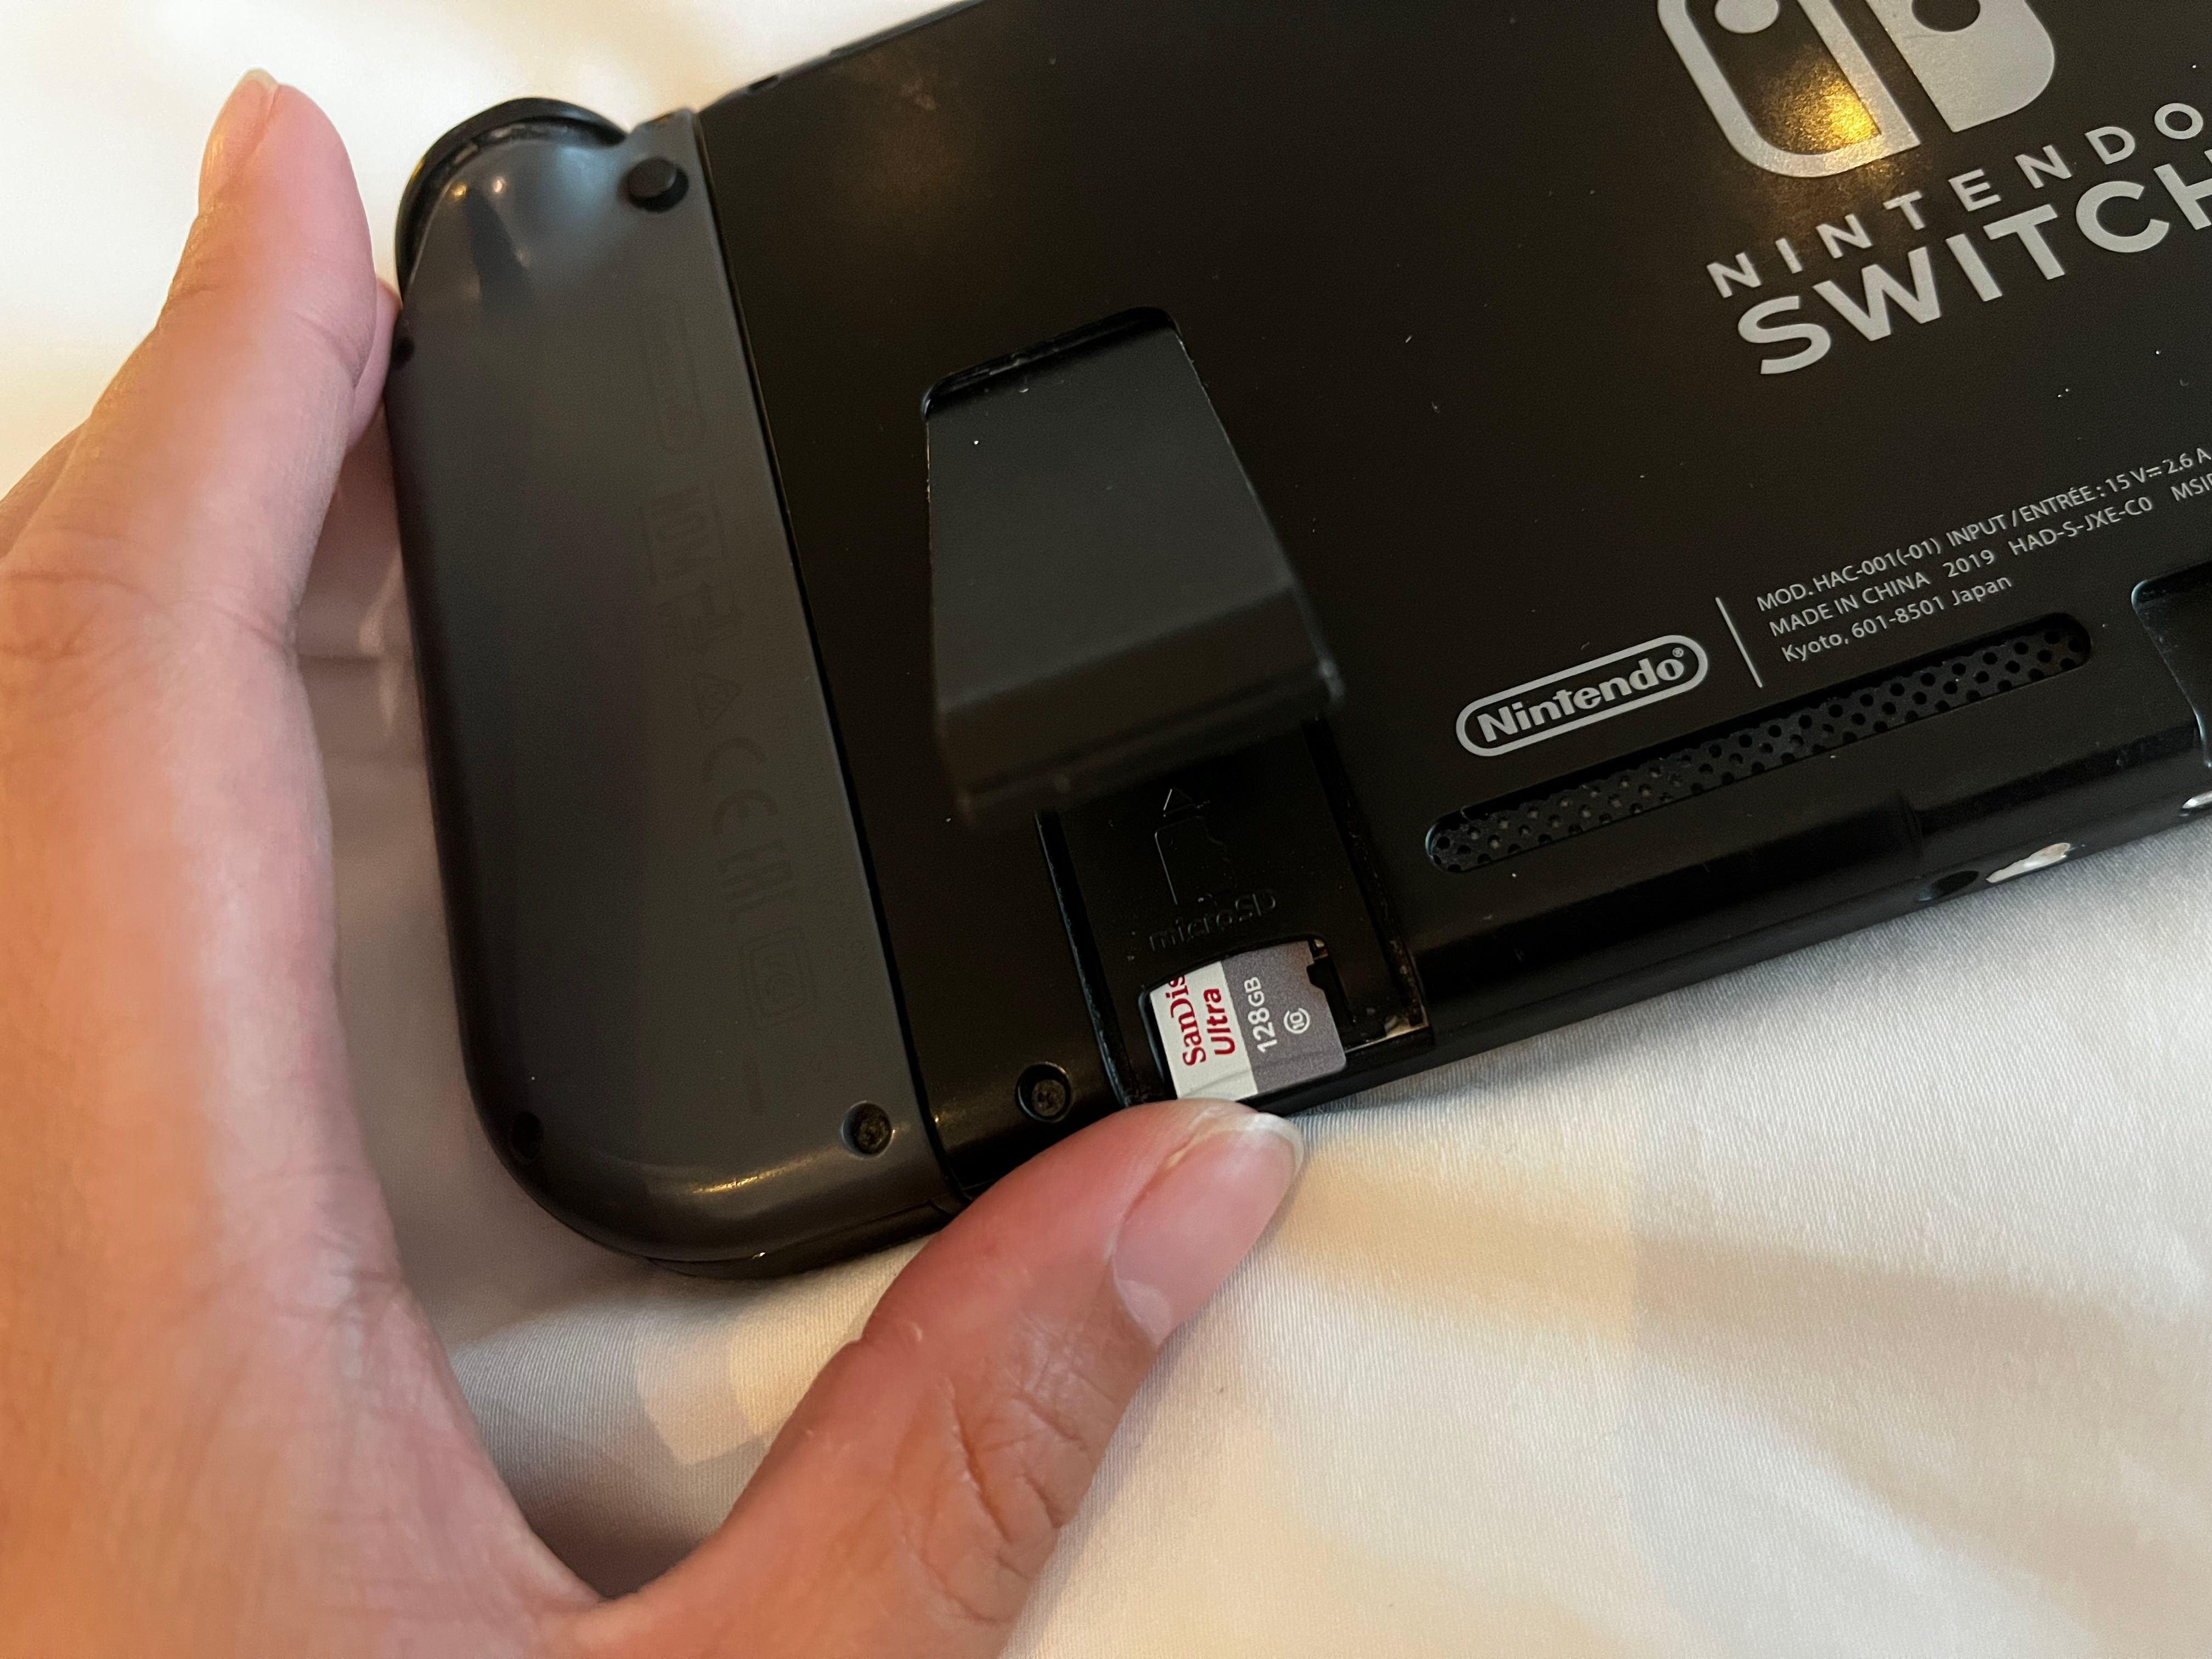 Insert the microSD into Nintendo Switch